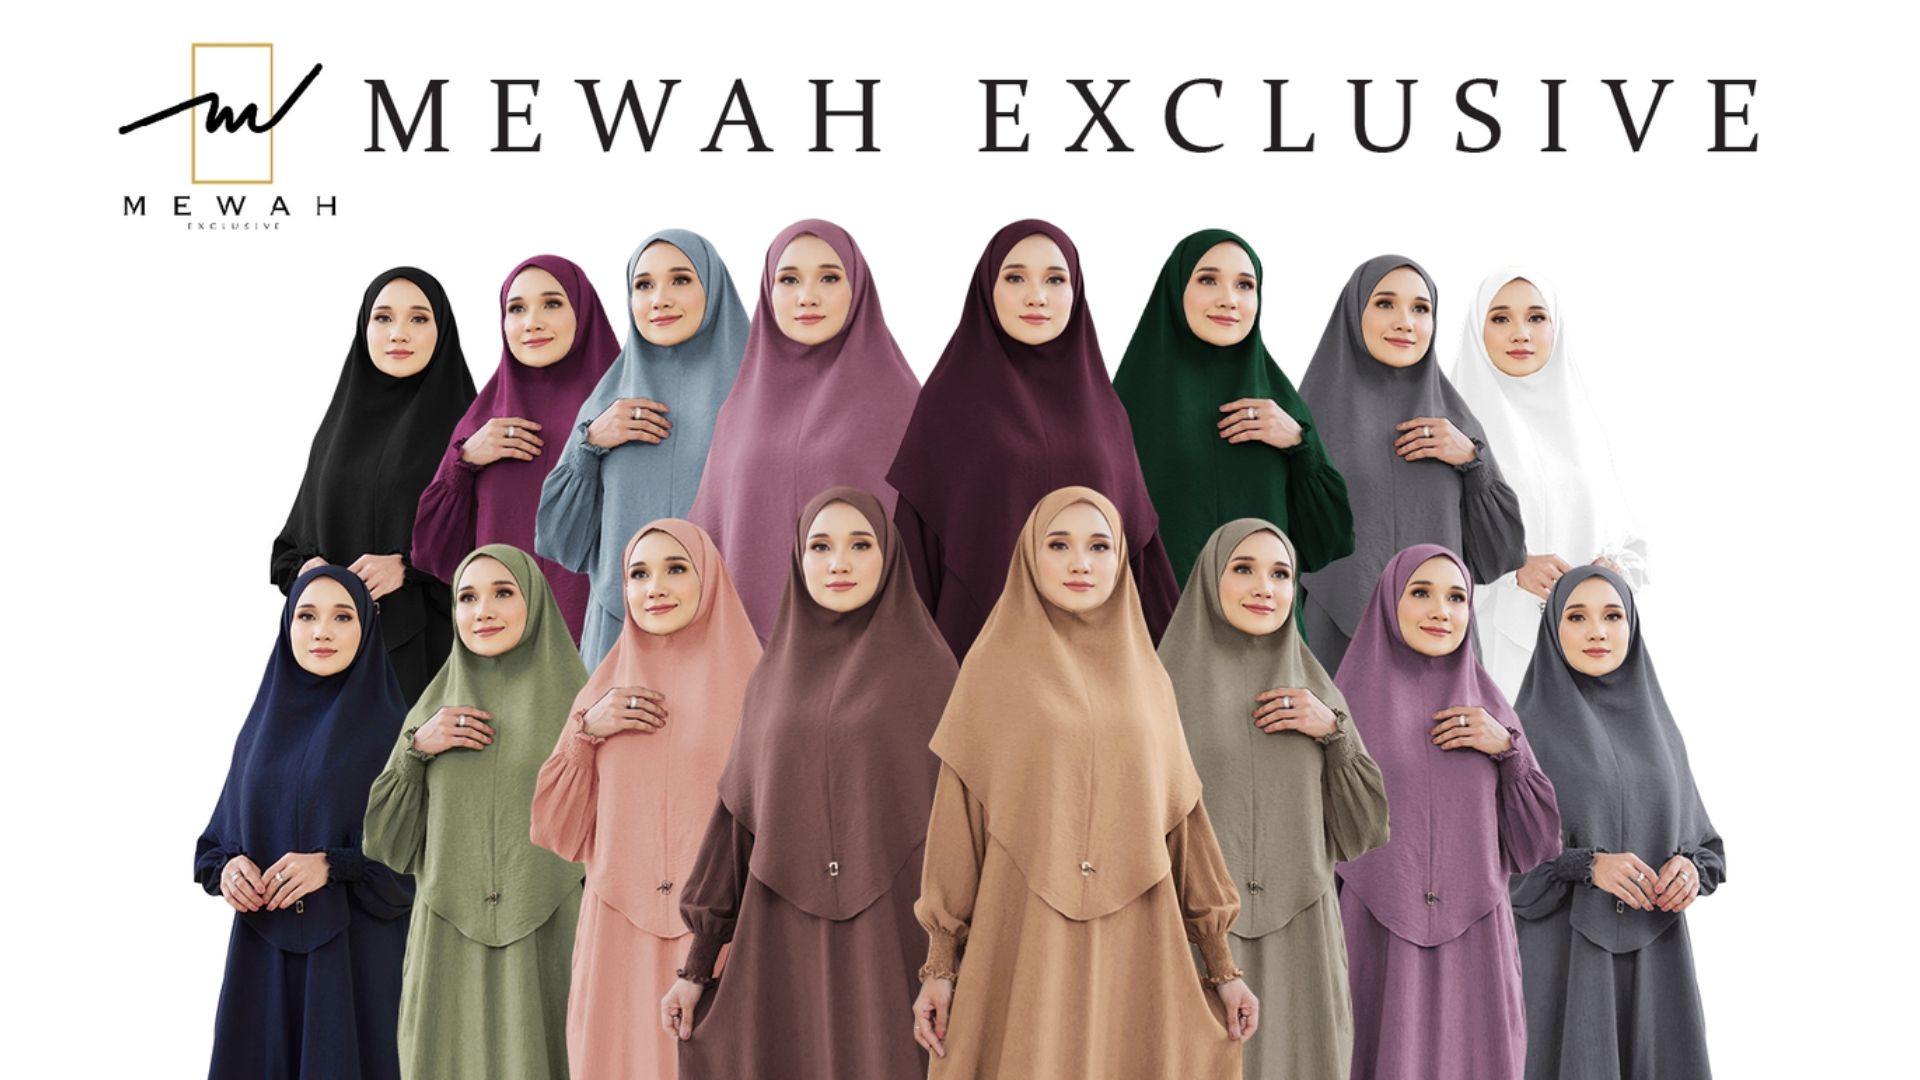 mewah-exclusive-banner